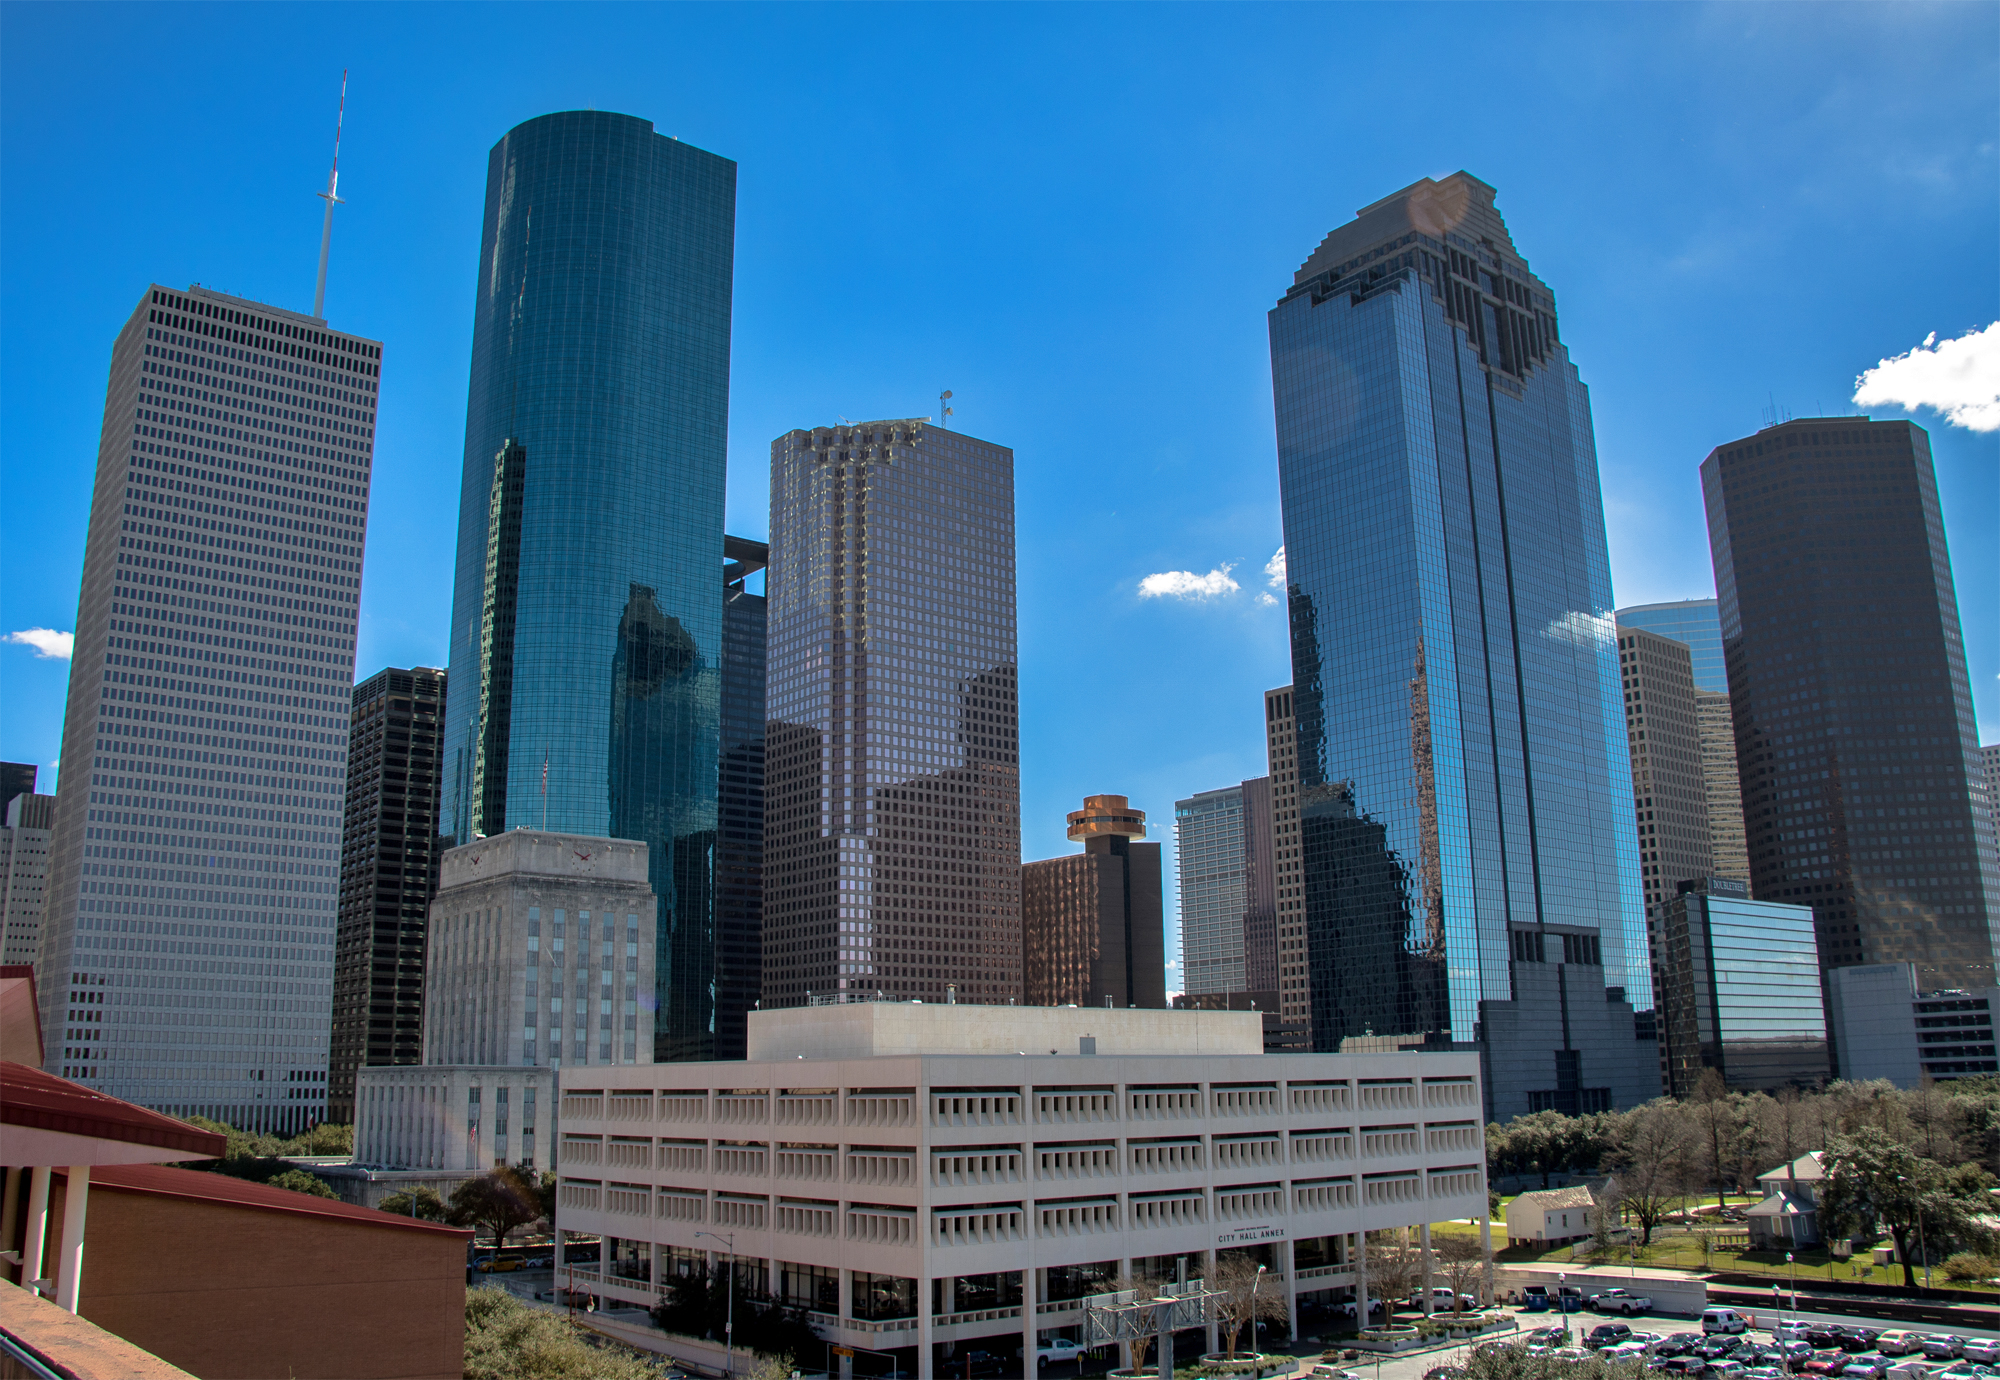 Public Invited To Workshops On Improving Downtown Houston – Houston